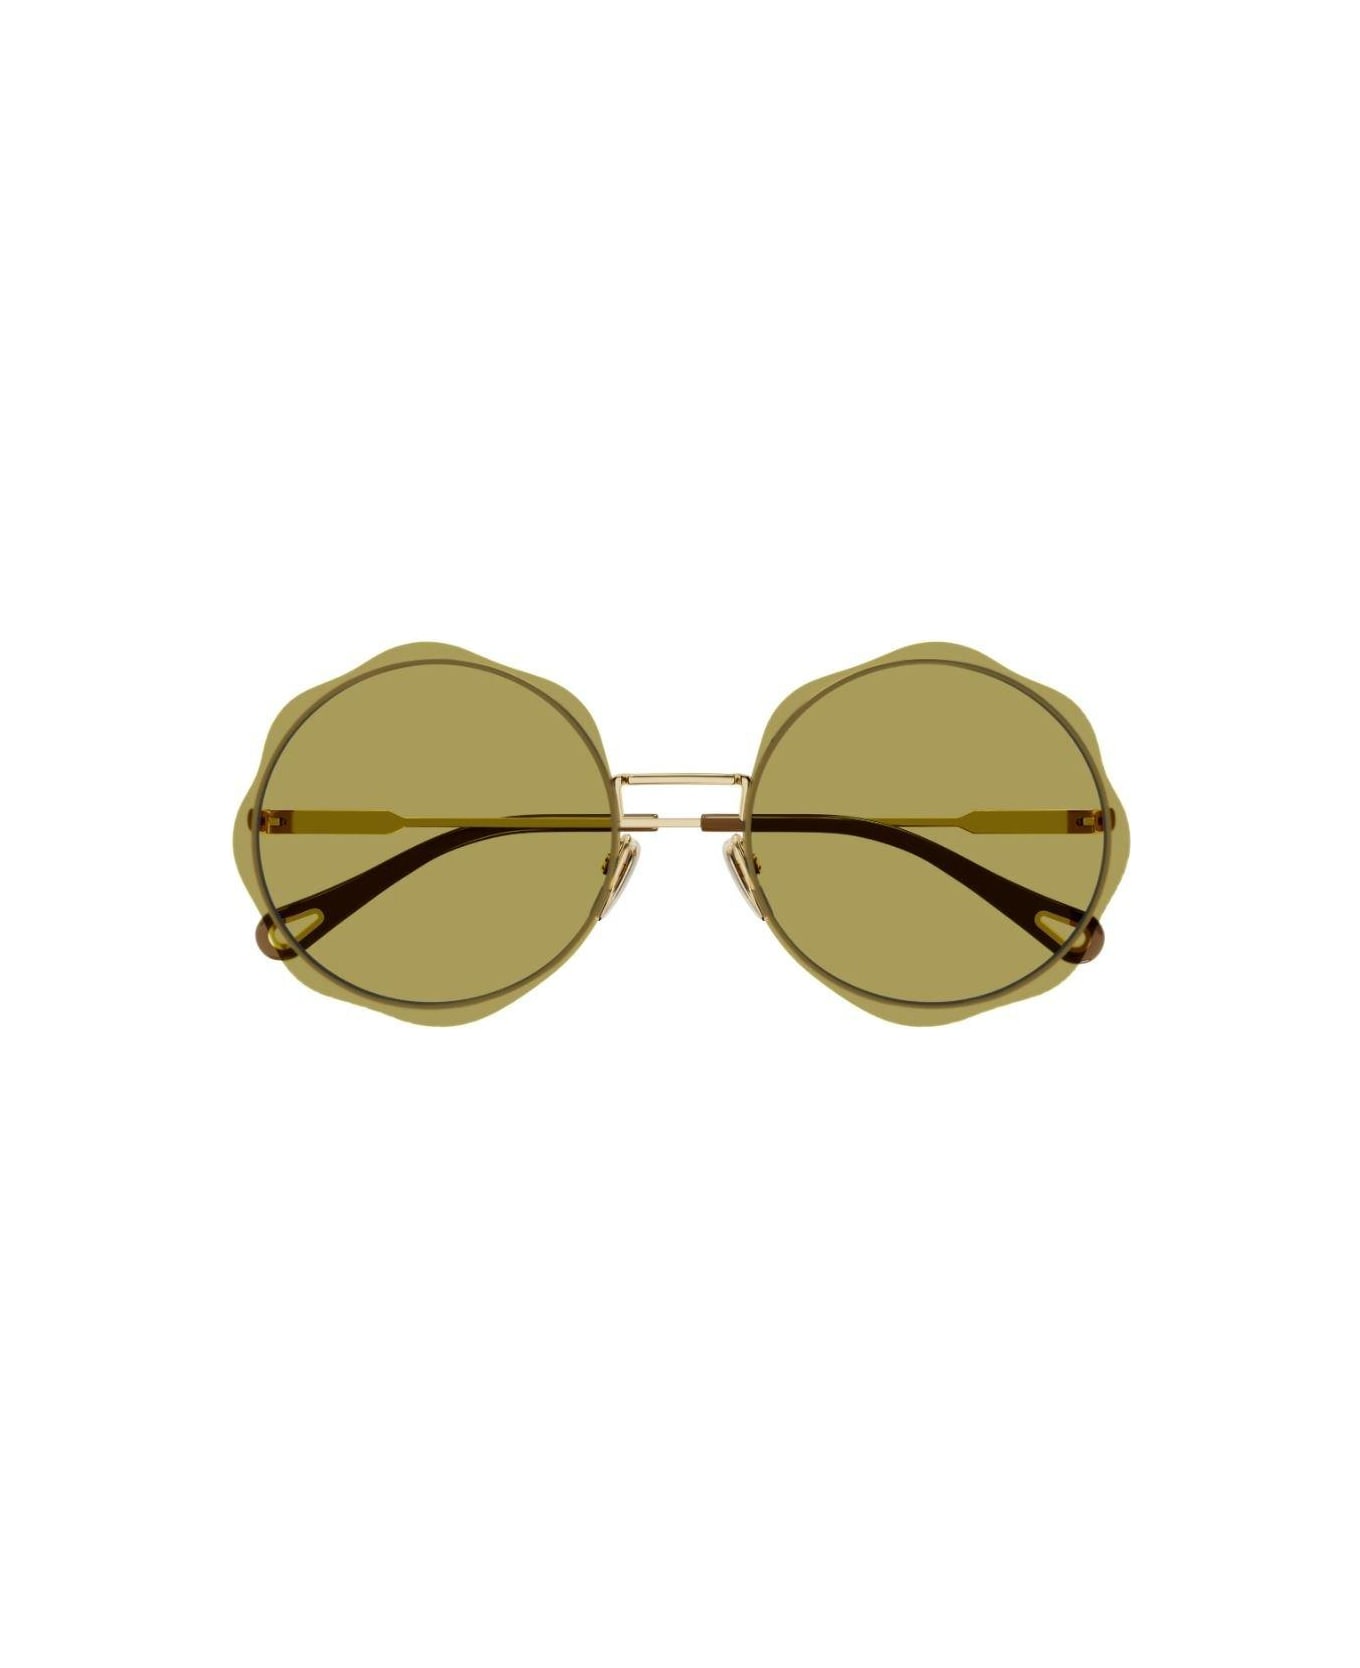 Chloé Honore Sunglasses - Gold/green サングラス